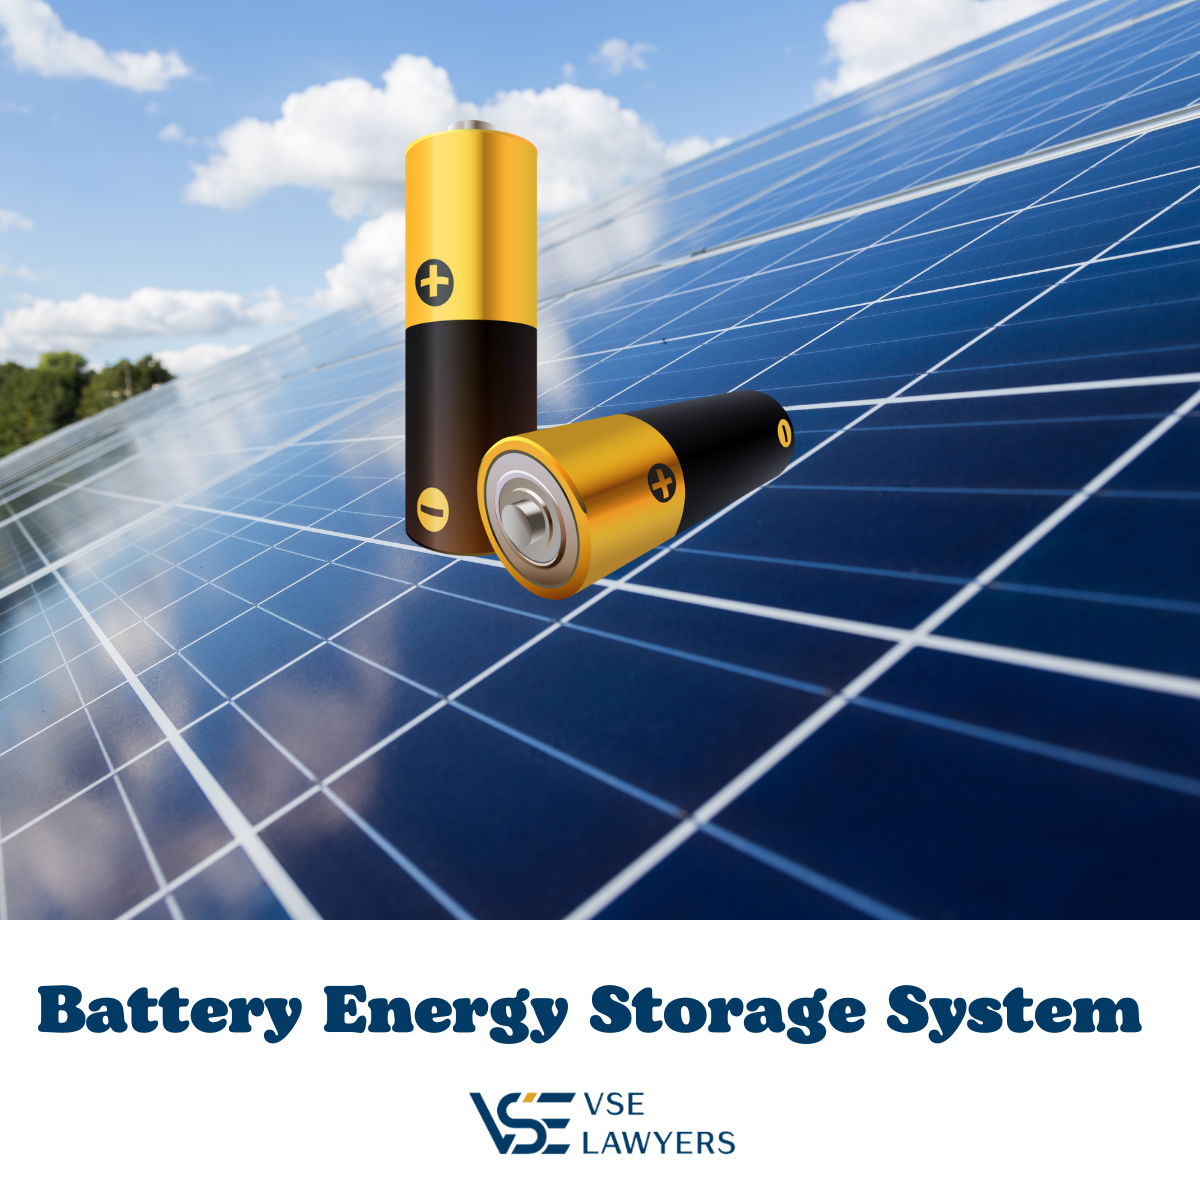 BATTERY ENERGY STORAGE SYSTEM